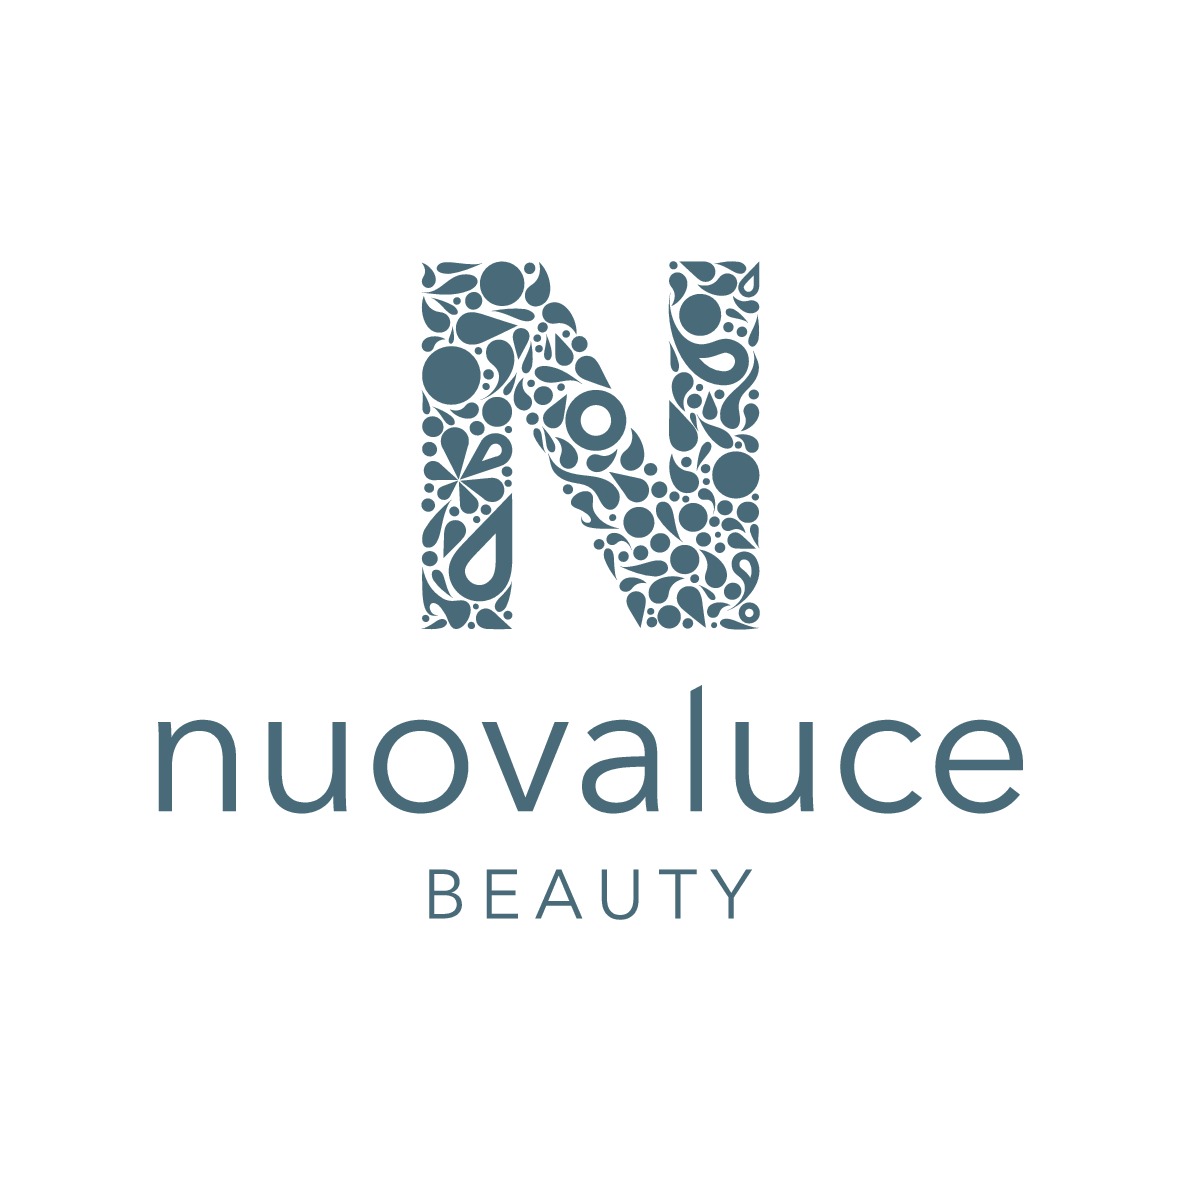 Nuovaluce Beauty, Thursday, January 2, 2020, Press release picture